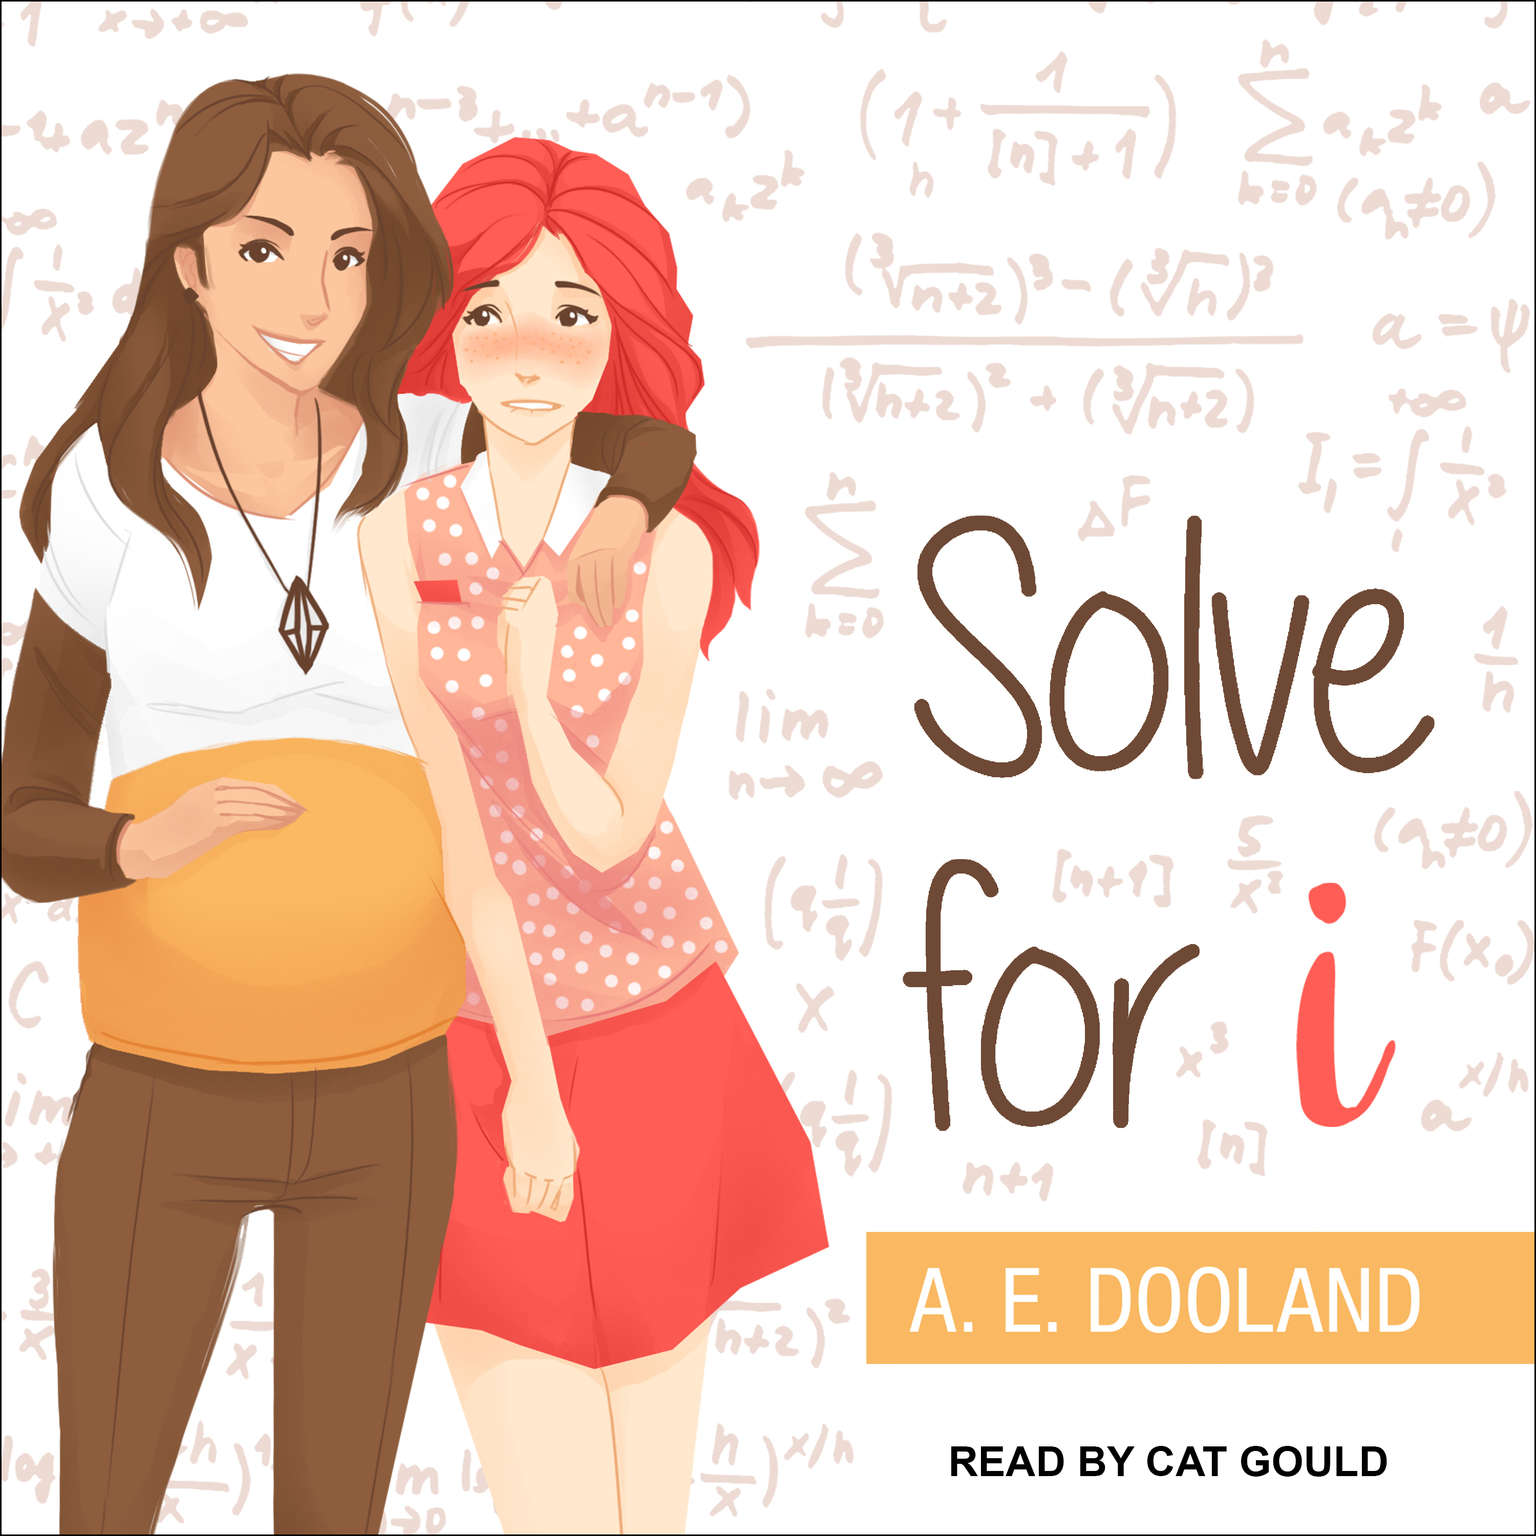 Cat Gould, A. E. Dooland: Solve for i (AudiobookFormat, 2017, self)